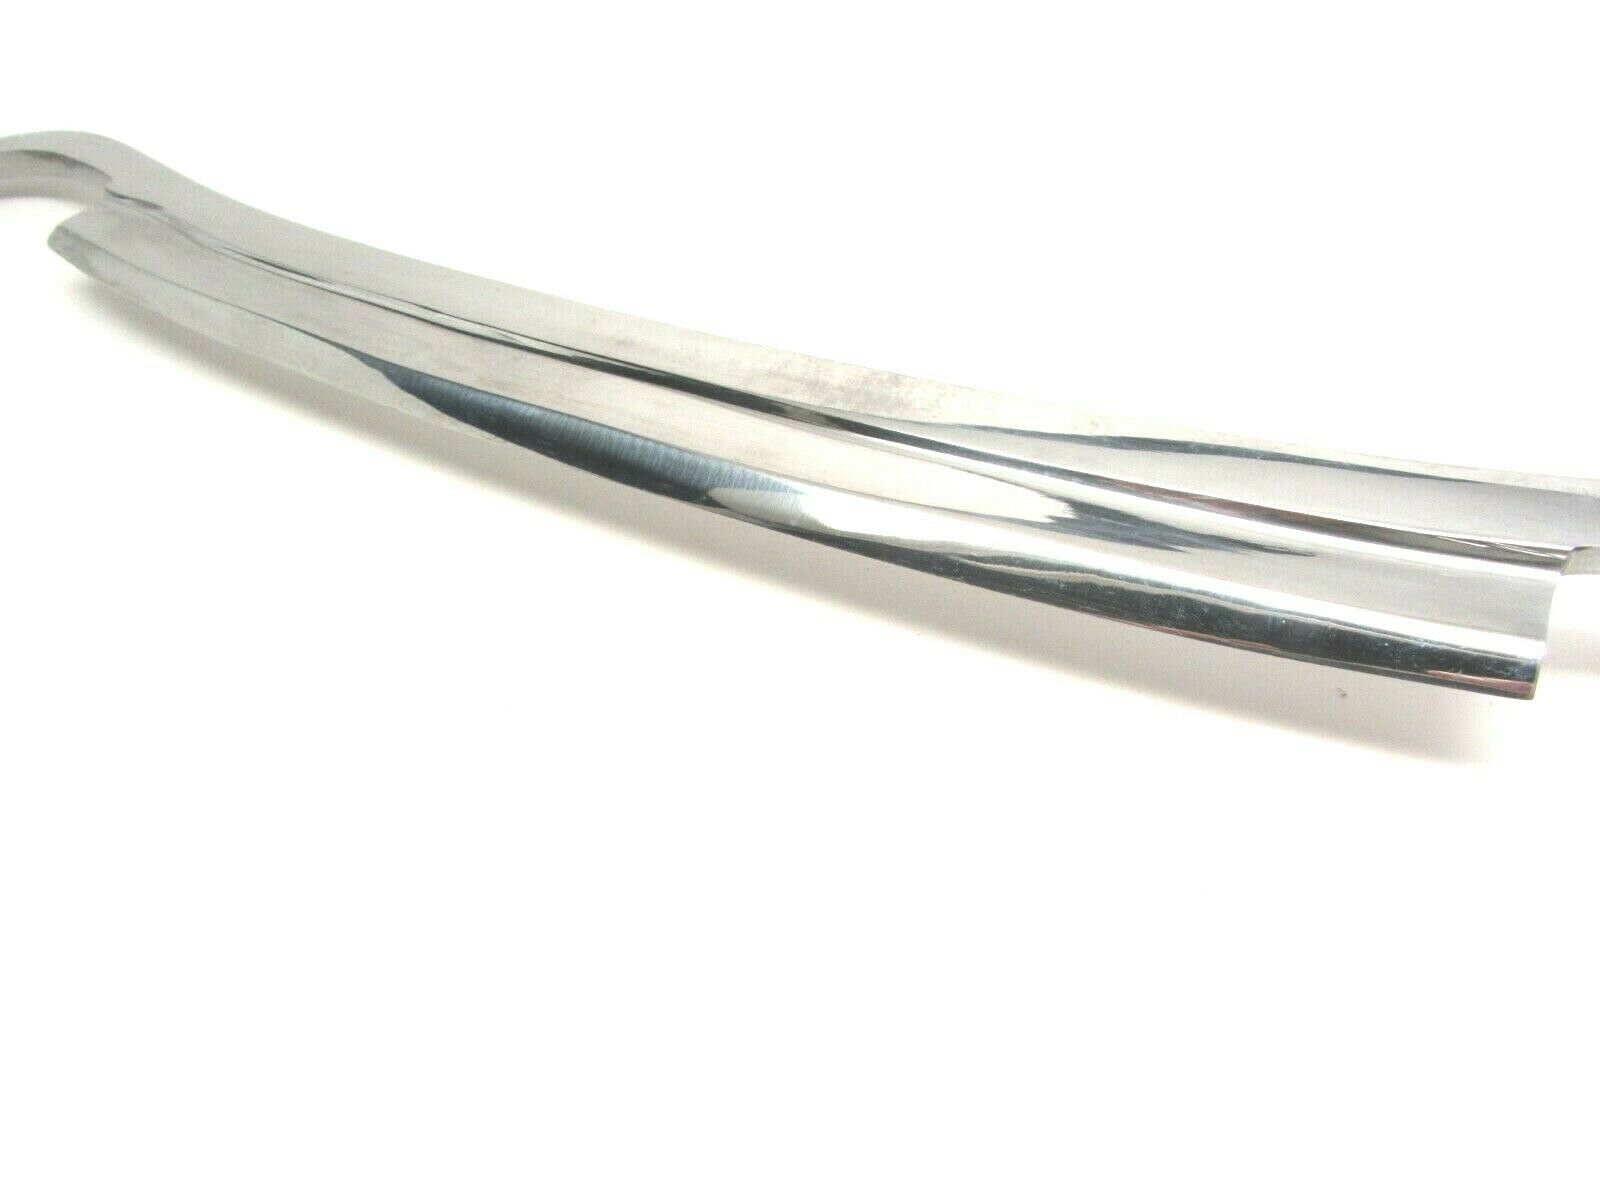 Drawknife STRYI Profi 130mm, Woodworking Straight PushKnife for Cutting Wood